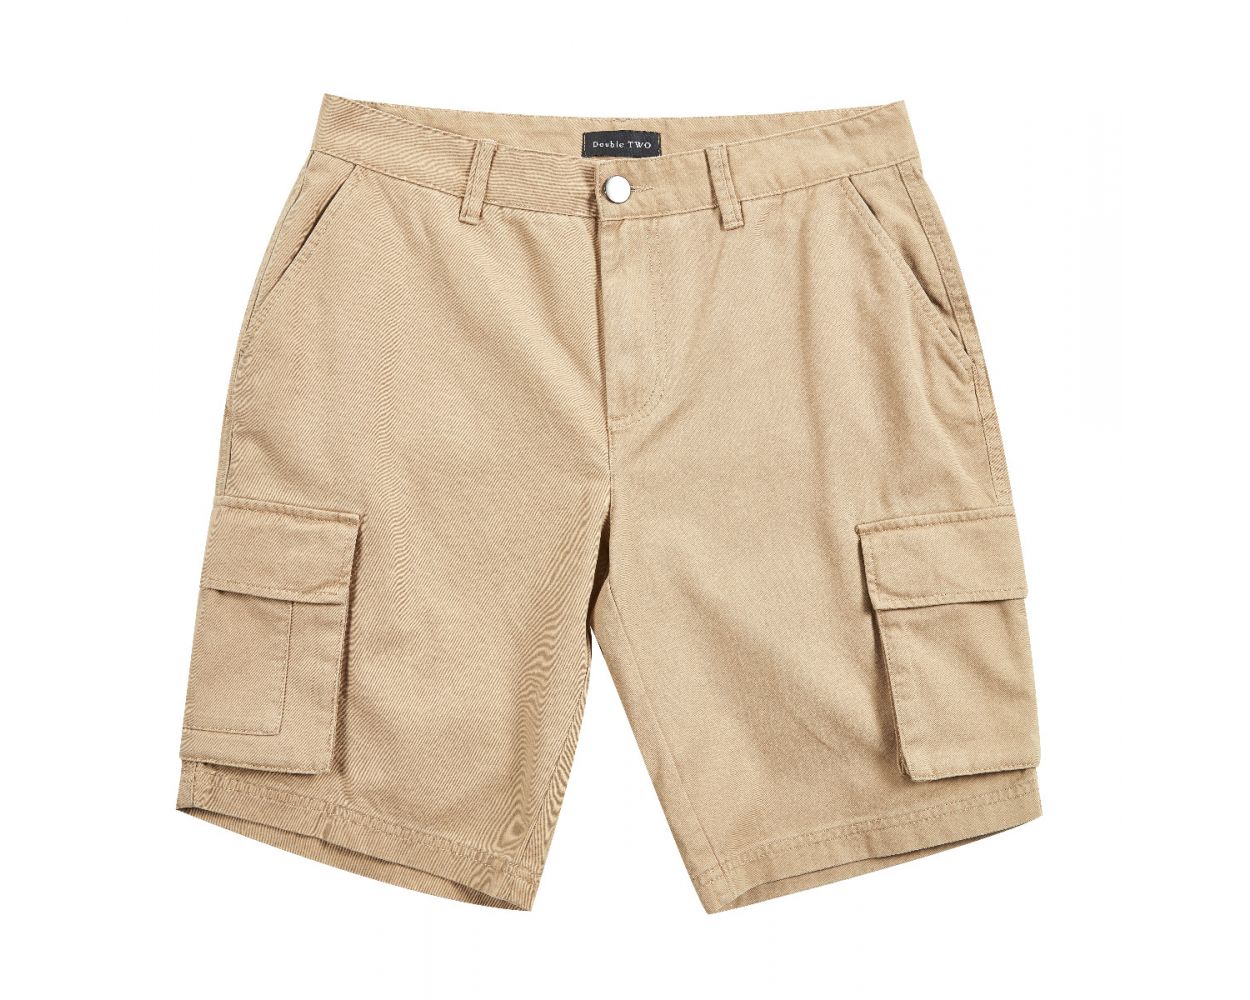 Cargo shorts for men